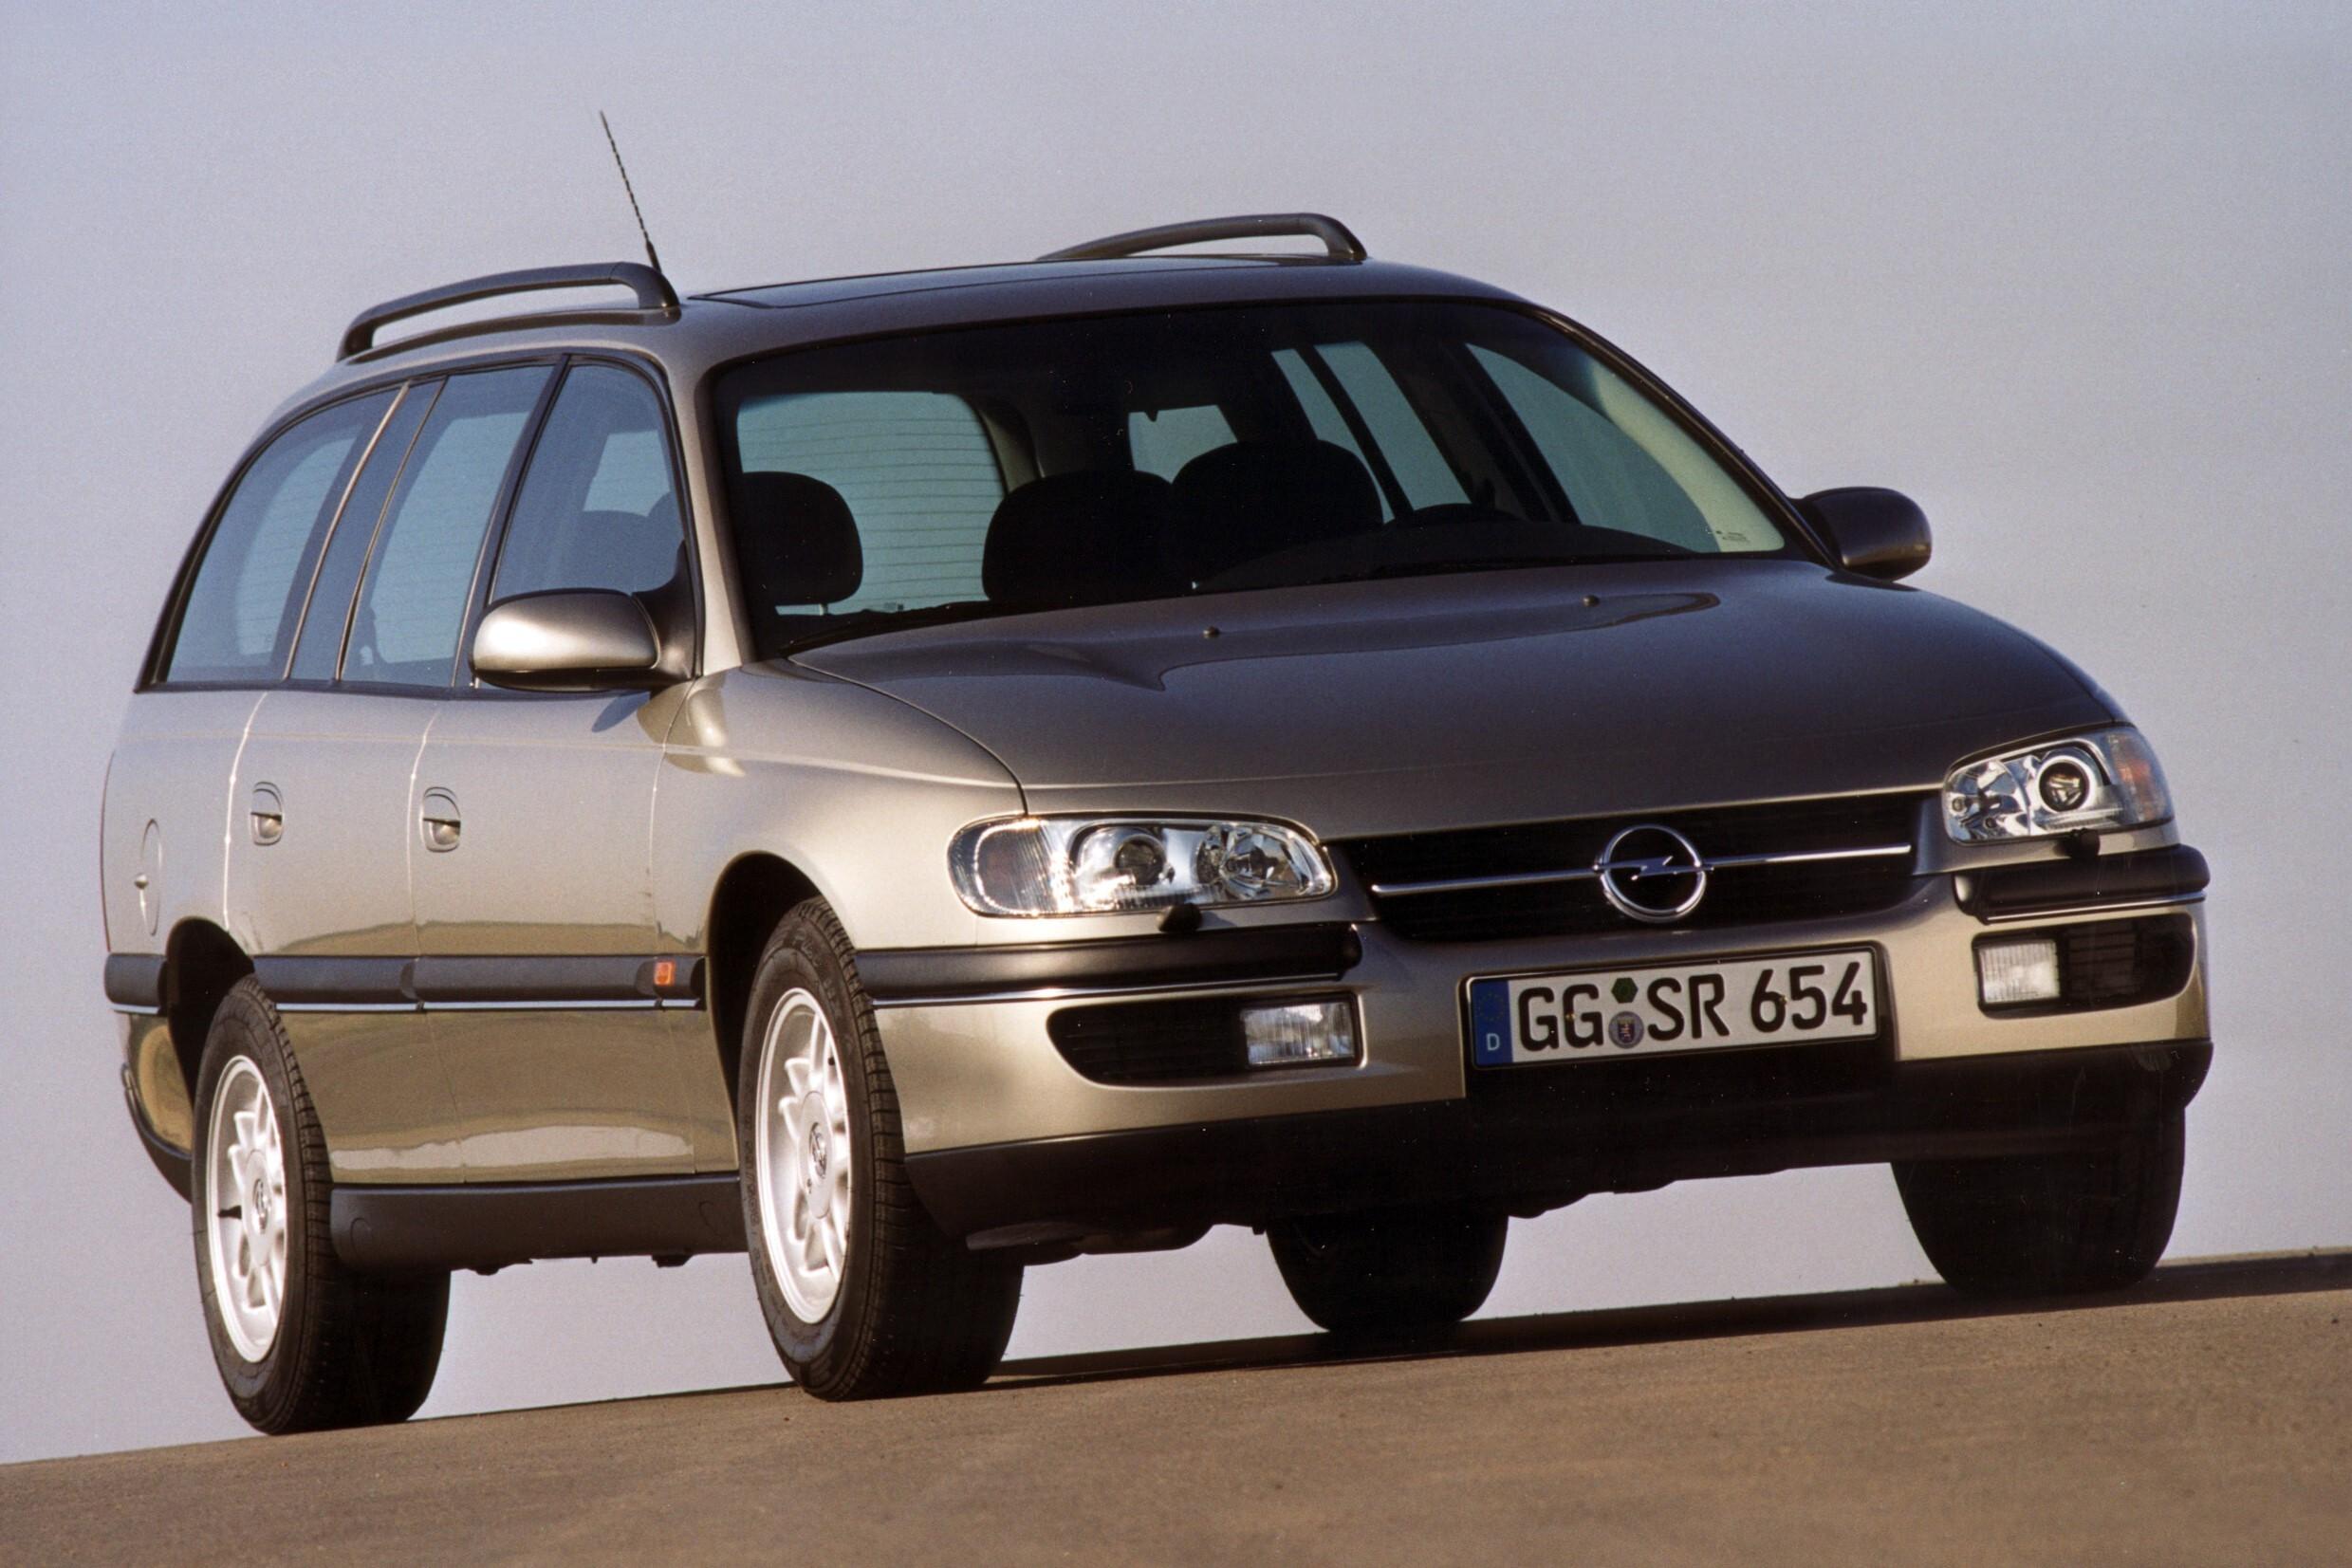 Универсал караван. Opel Omega 1999 универсал. Opel Omega b 1994-1999. Opel Omega, 1994 универсал. Opel Omega b универсал 1999.